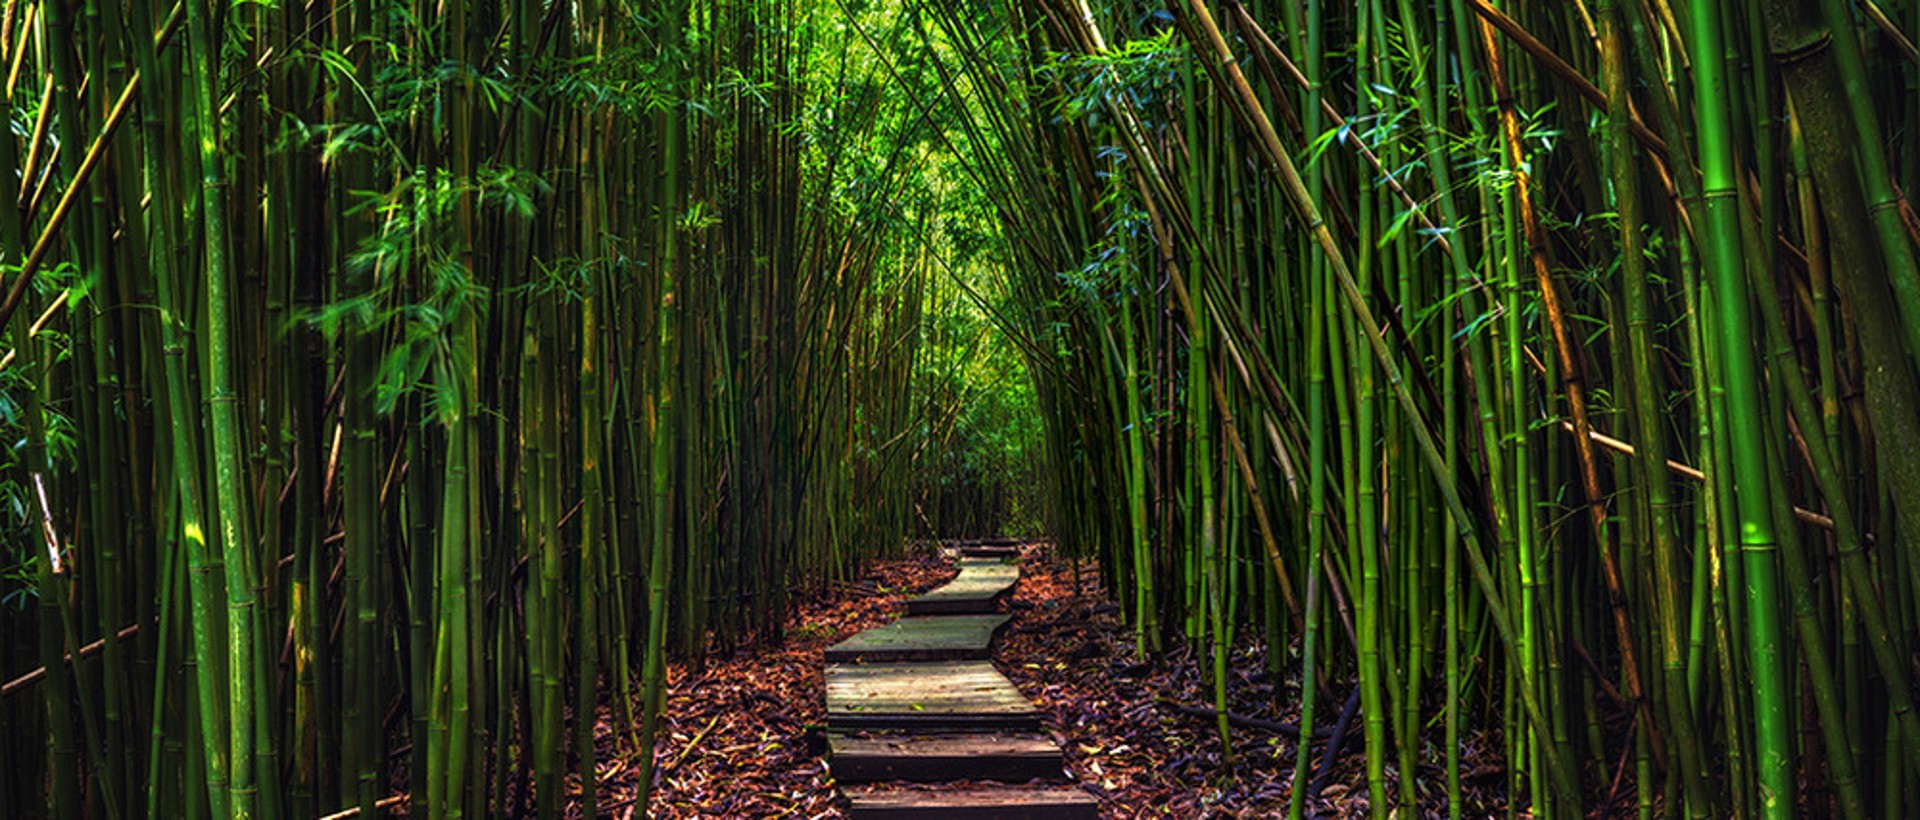 Bamboo Zen Pathway by Bryan Pezman